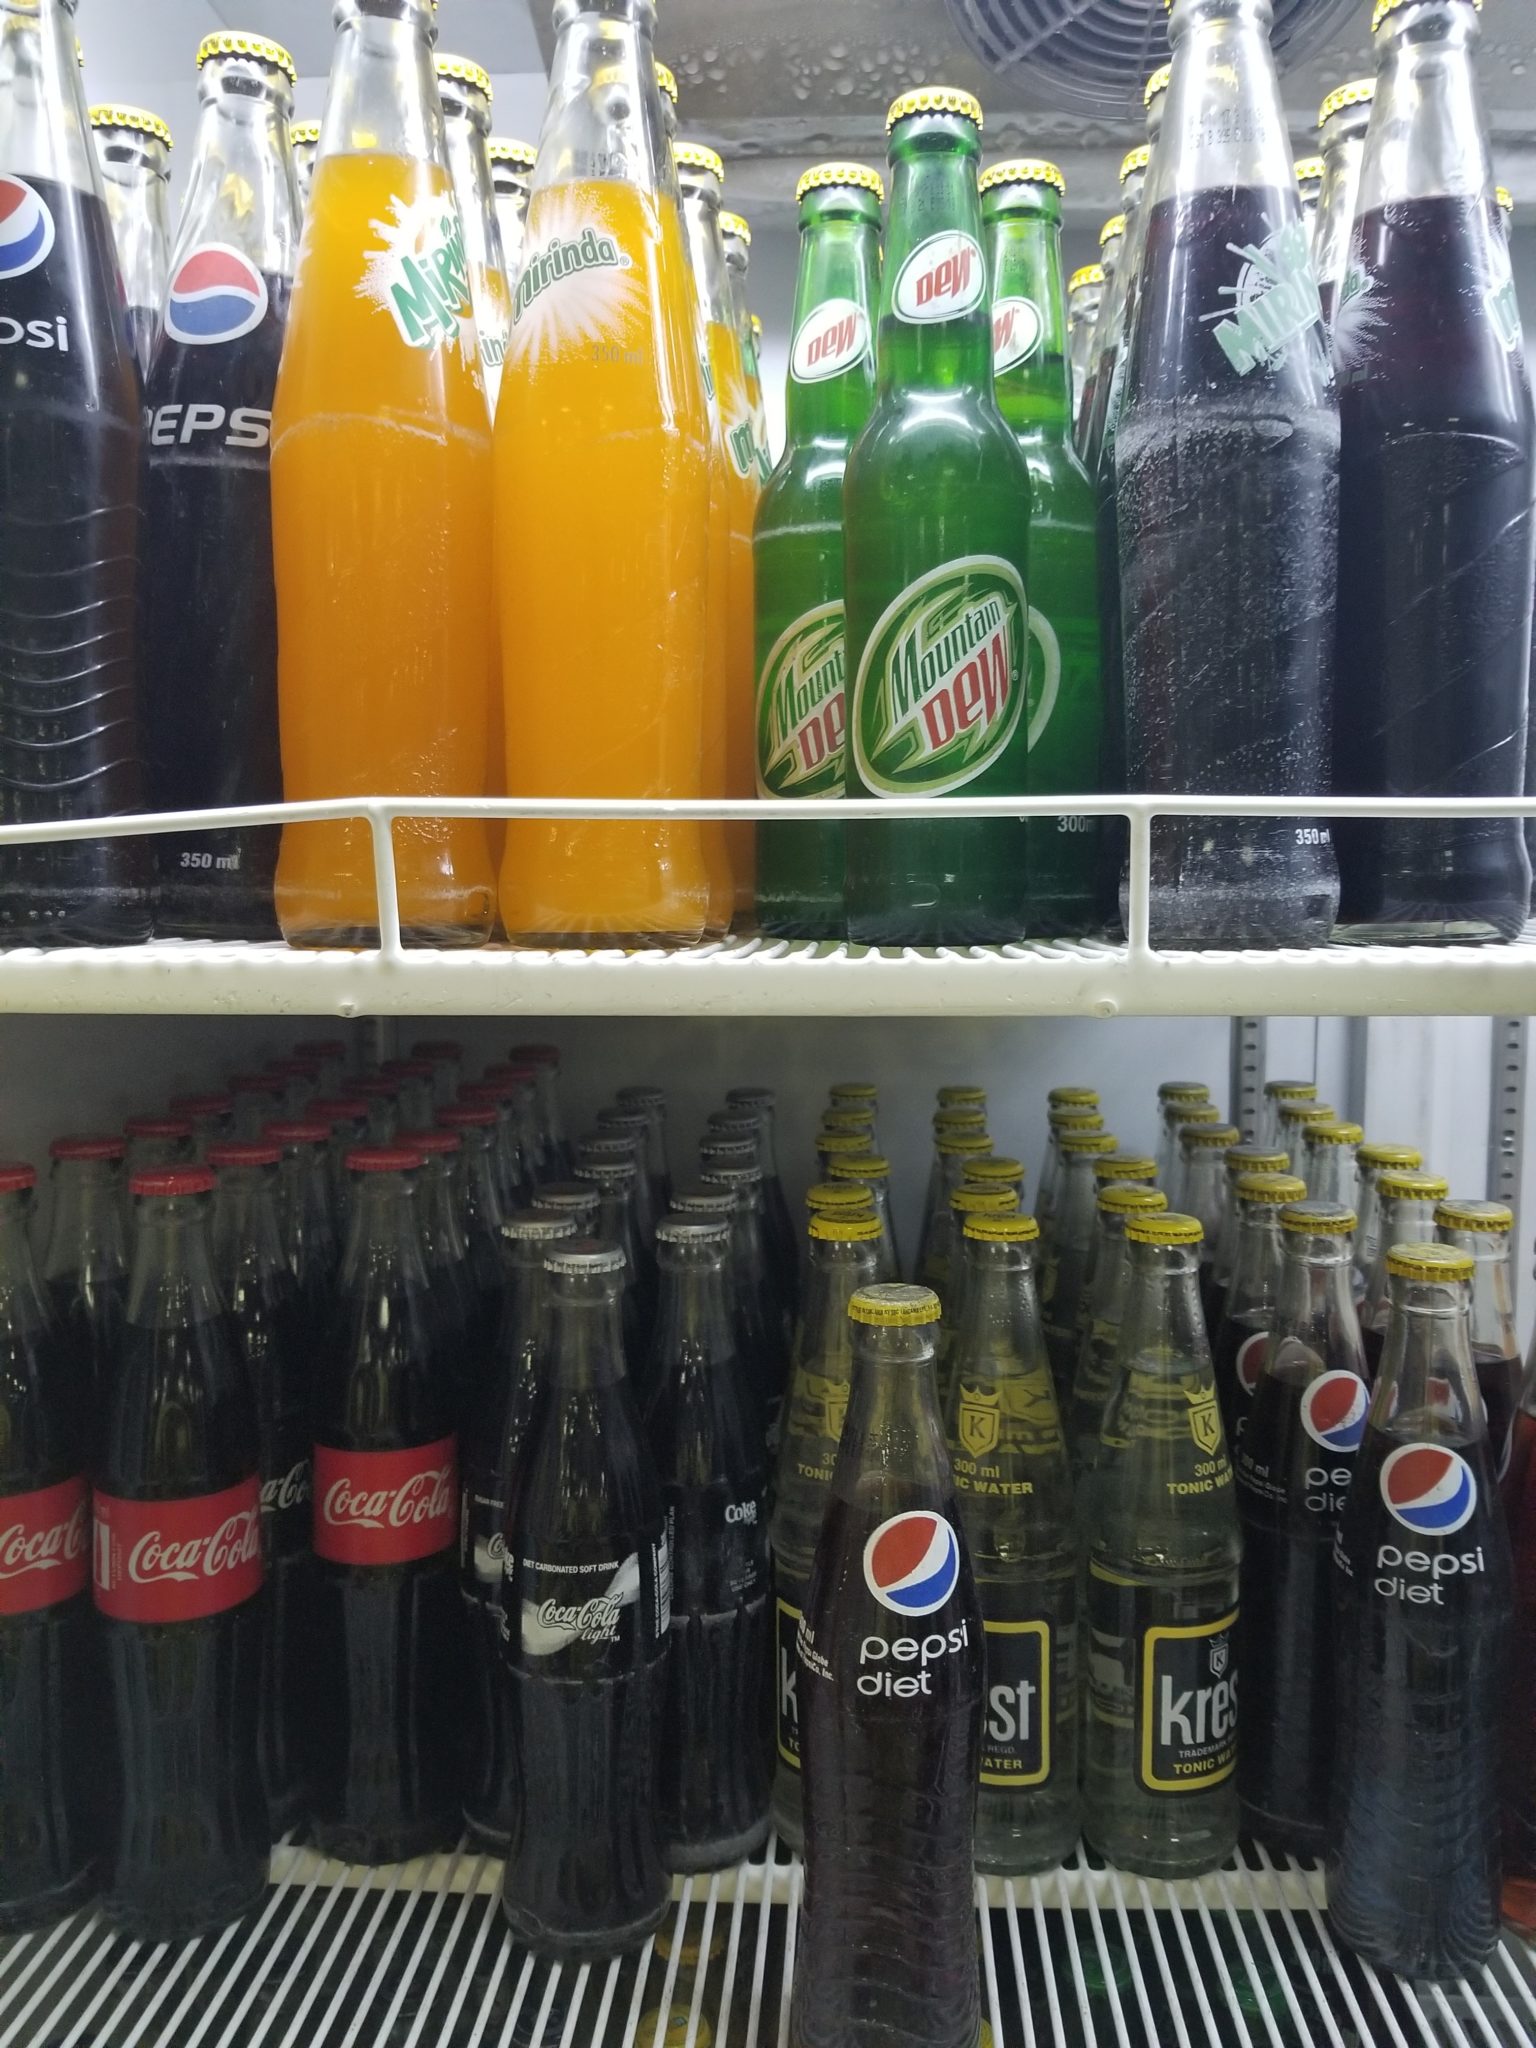 a shelf with bottles of soda